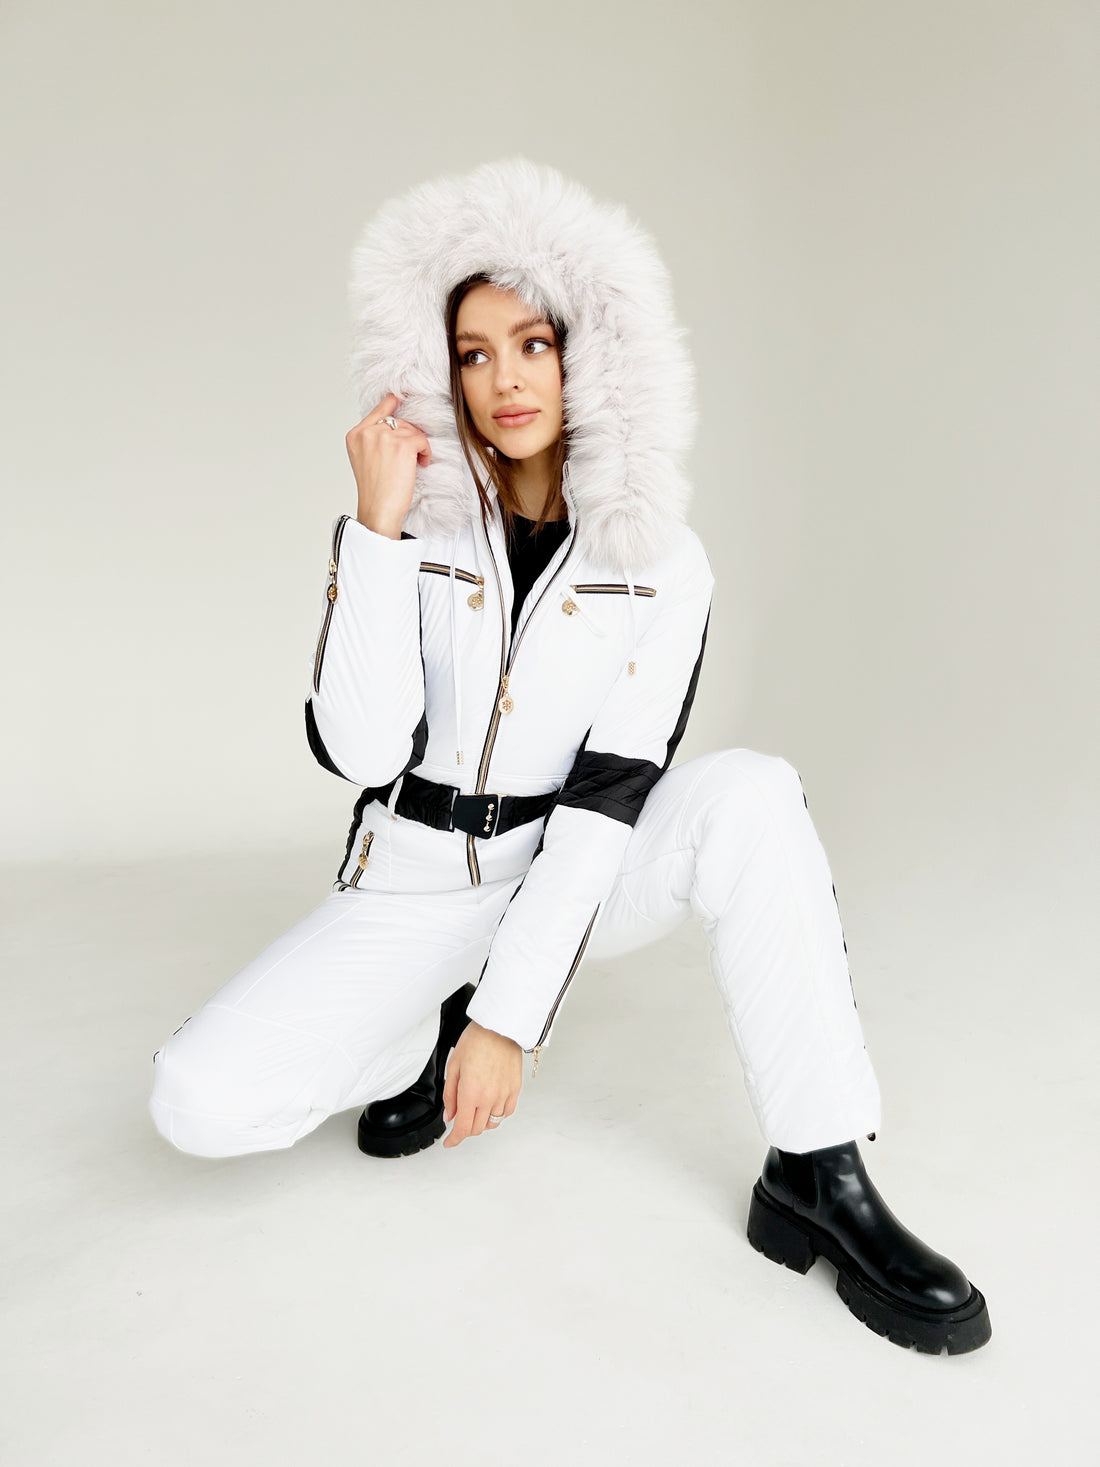 White ski suit DENALI - WHITE- with black side stripes snowsuit sport outfit